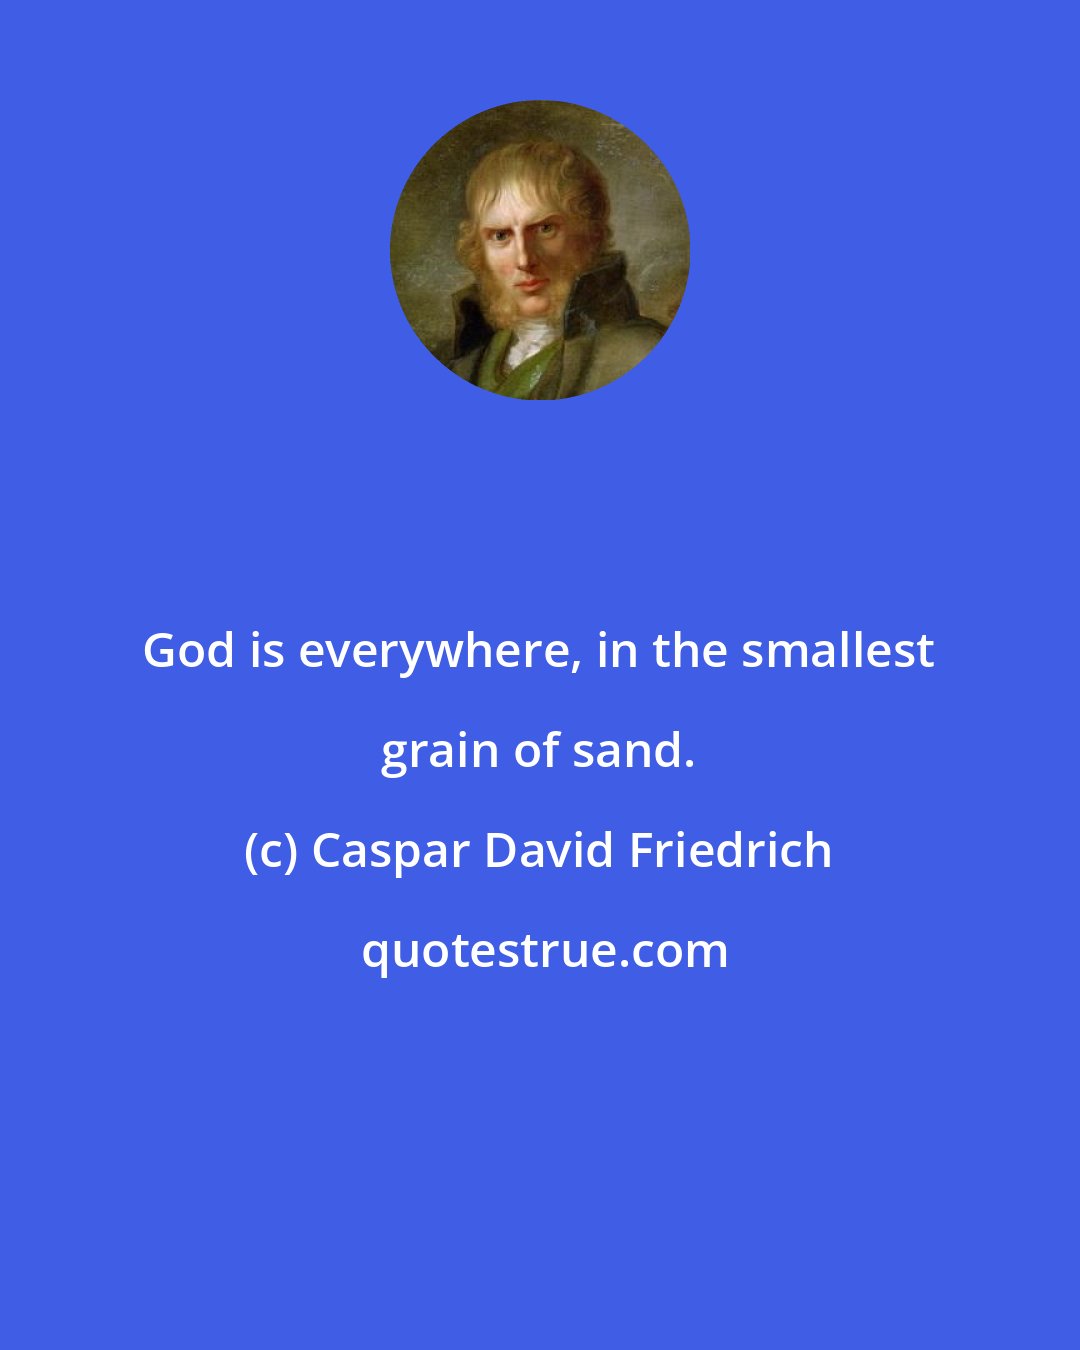 Caspar David Friedrich: God is everywhere, in the smallest grain of sand.